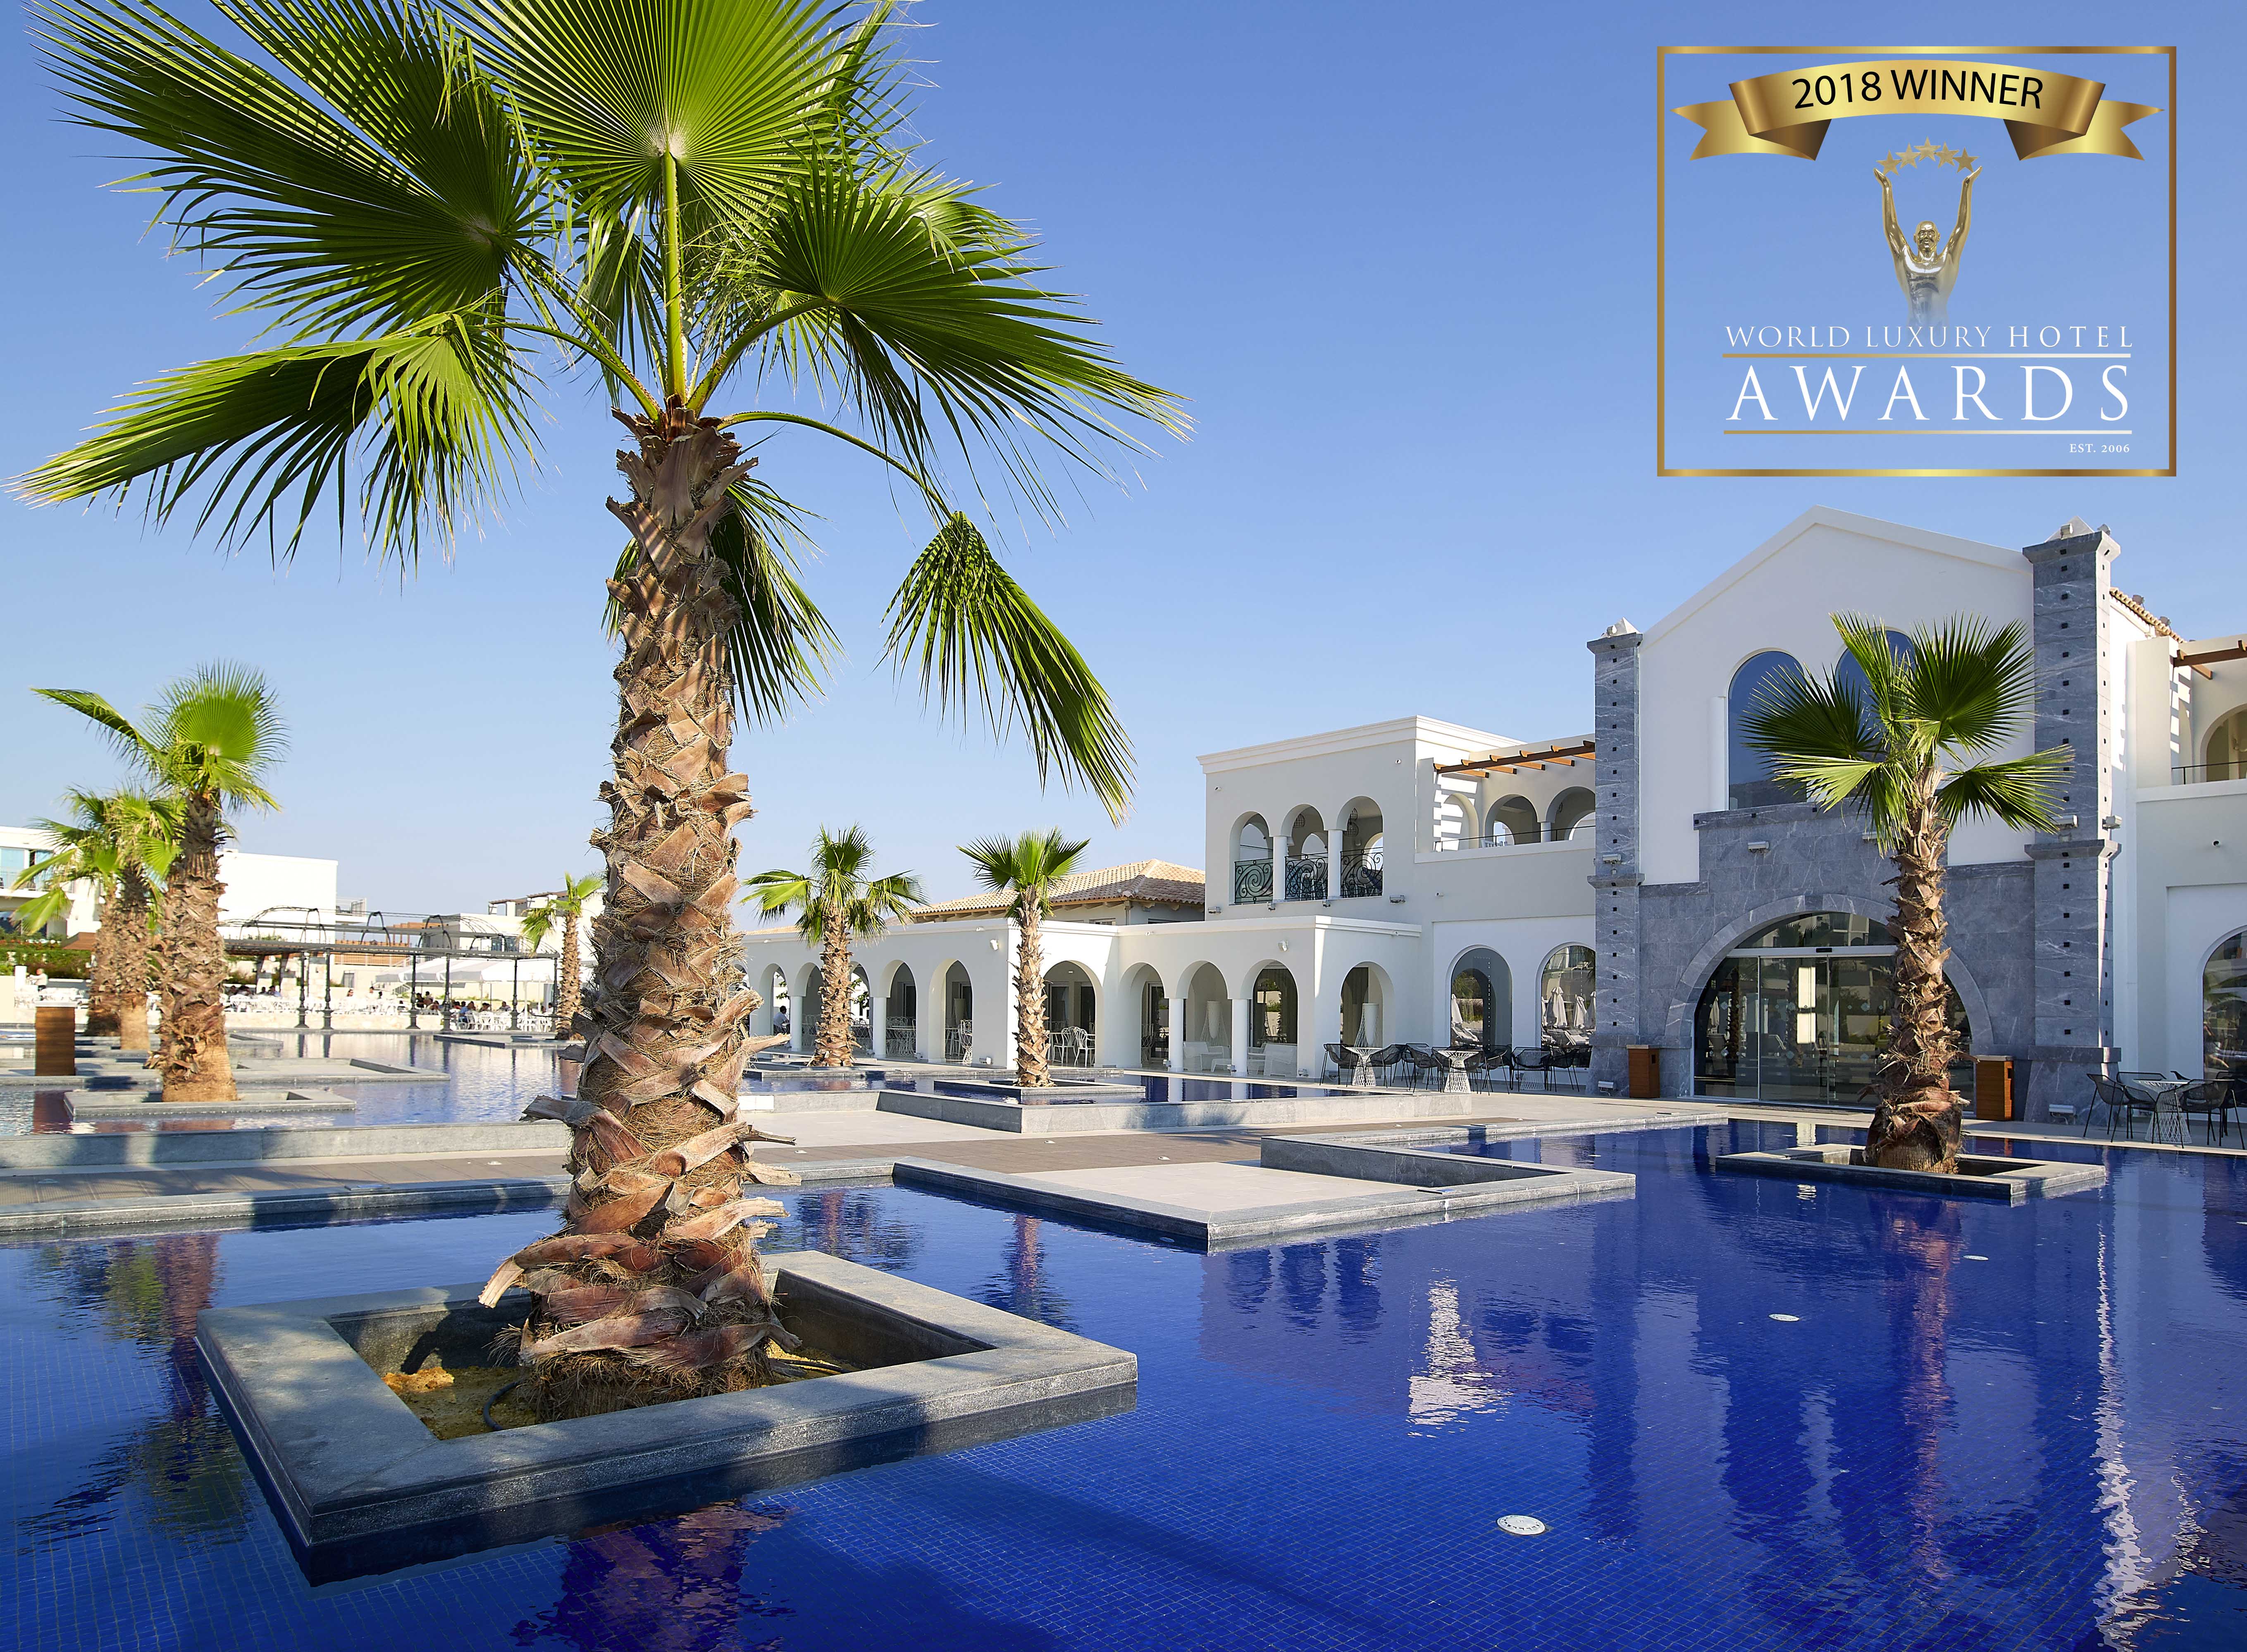 Anemos Luxury Grand Resort Wins 3 Awards At The World Luxury Hotel Awards 2018